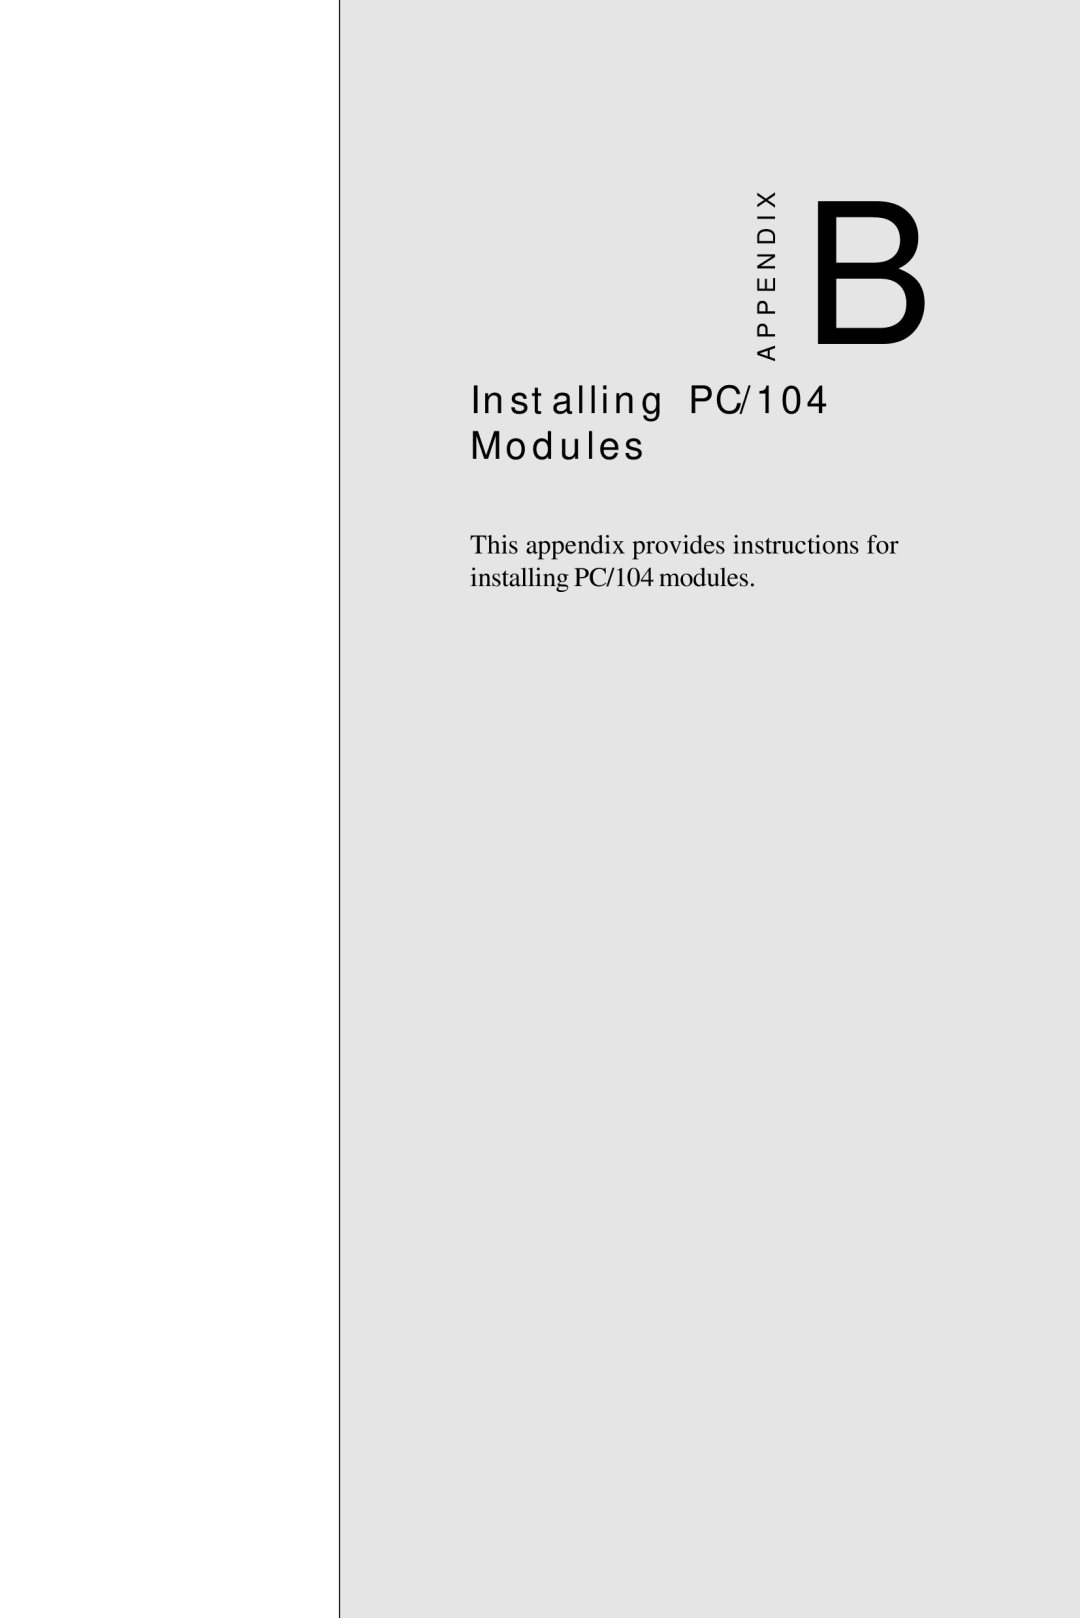 IBM All-in-One FC/Socket 370 Celeron, PCM-6890B manual Installing PC/104 Modules 